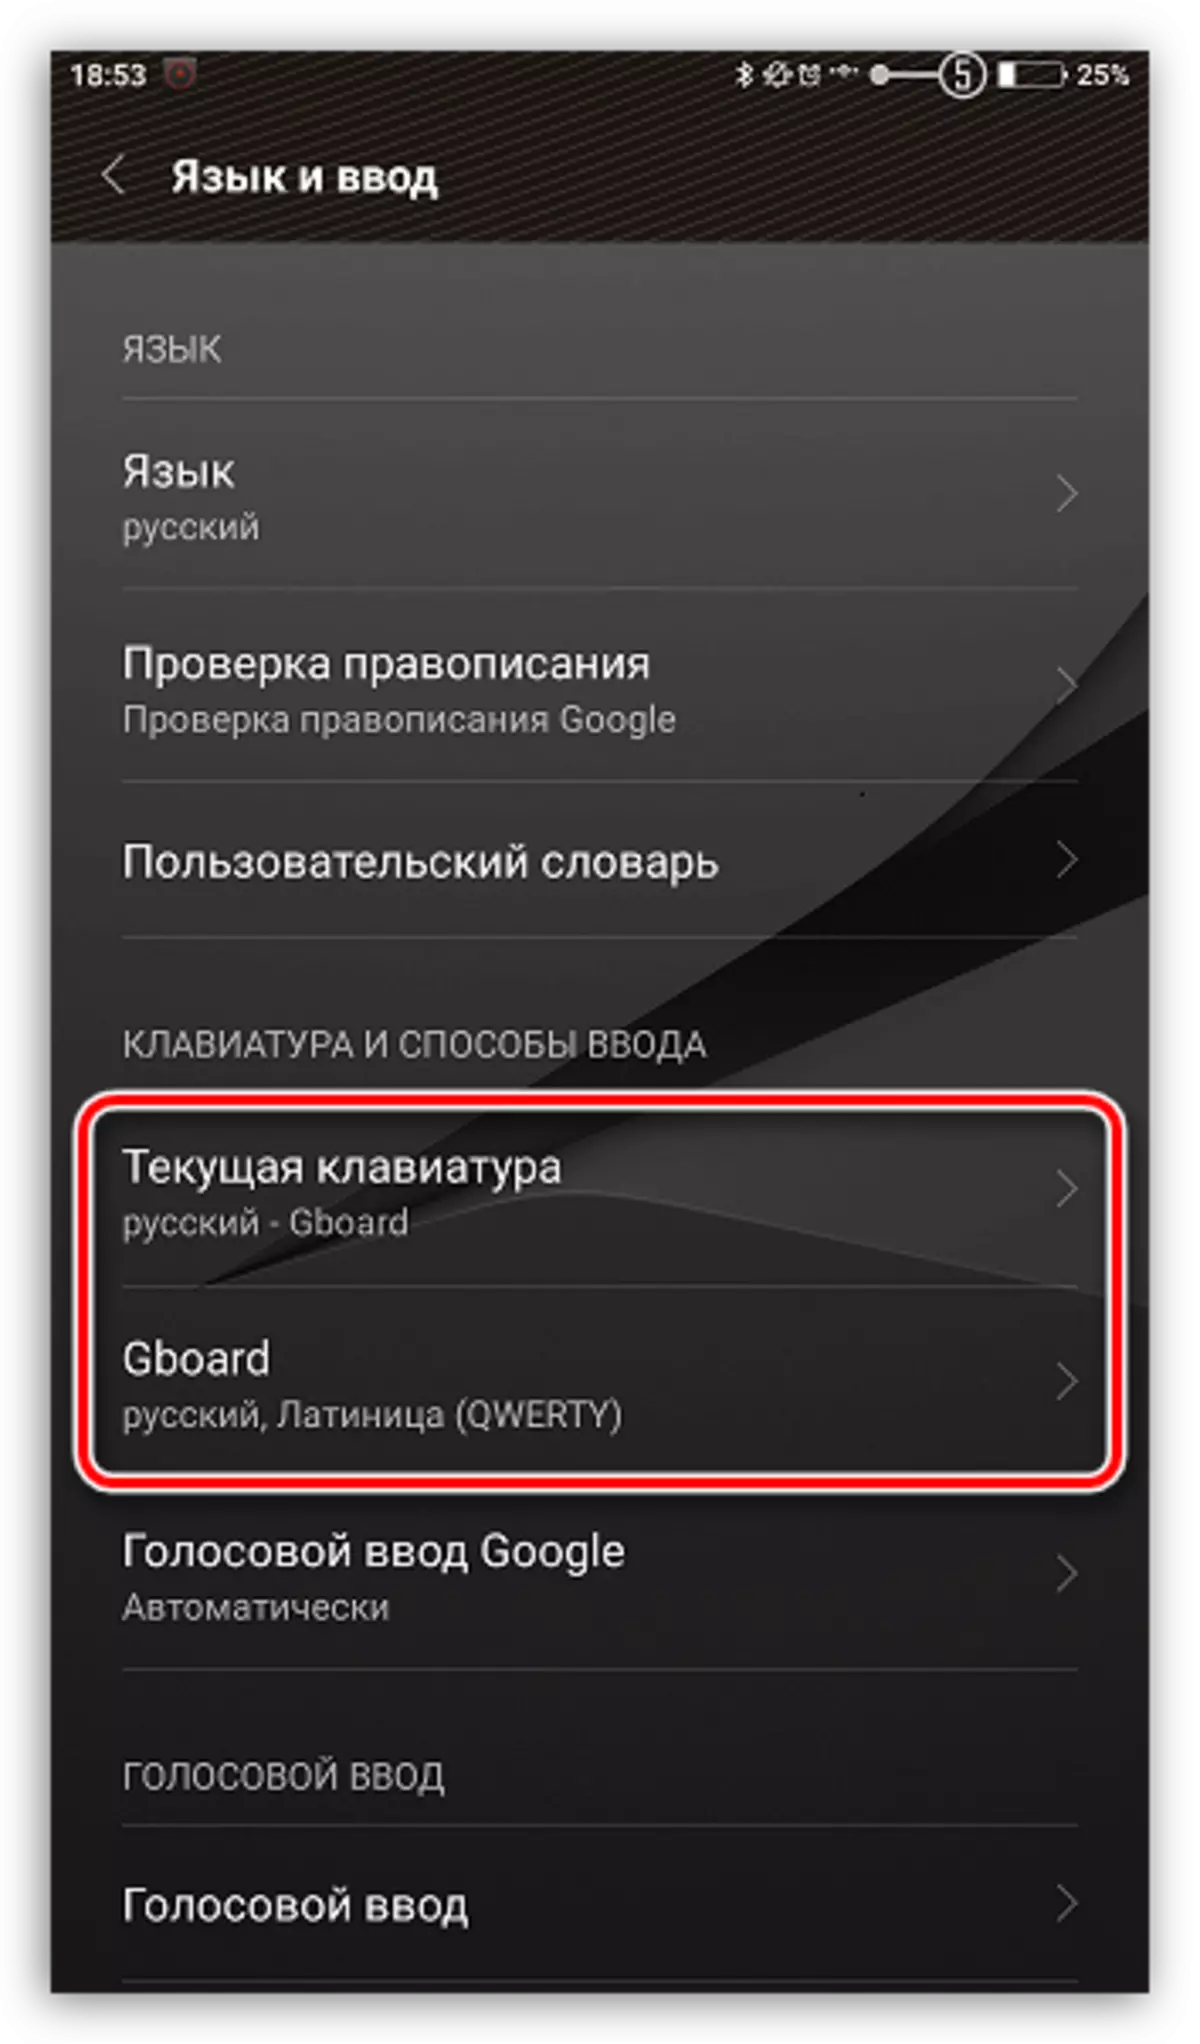 Hilbijartina klavyeyê li ser Android